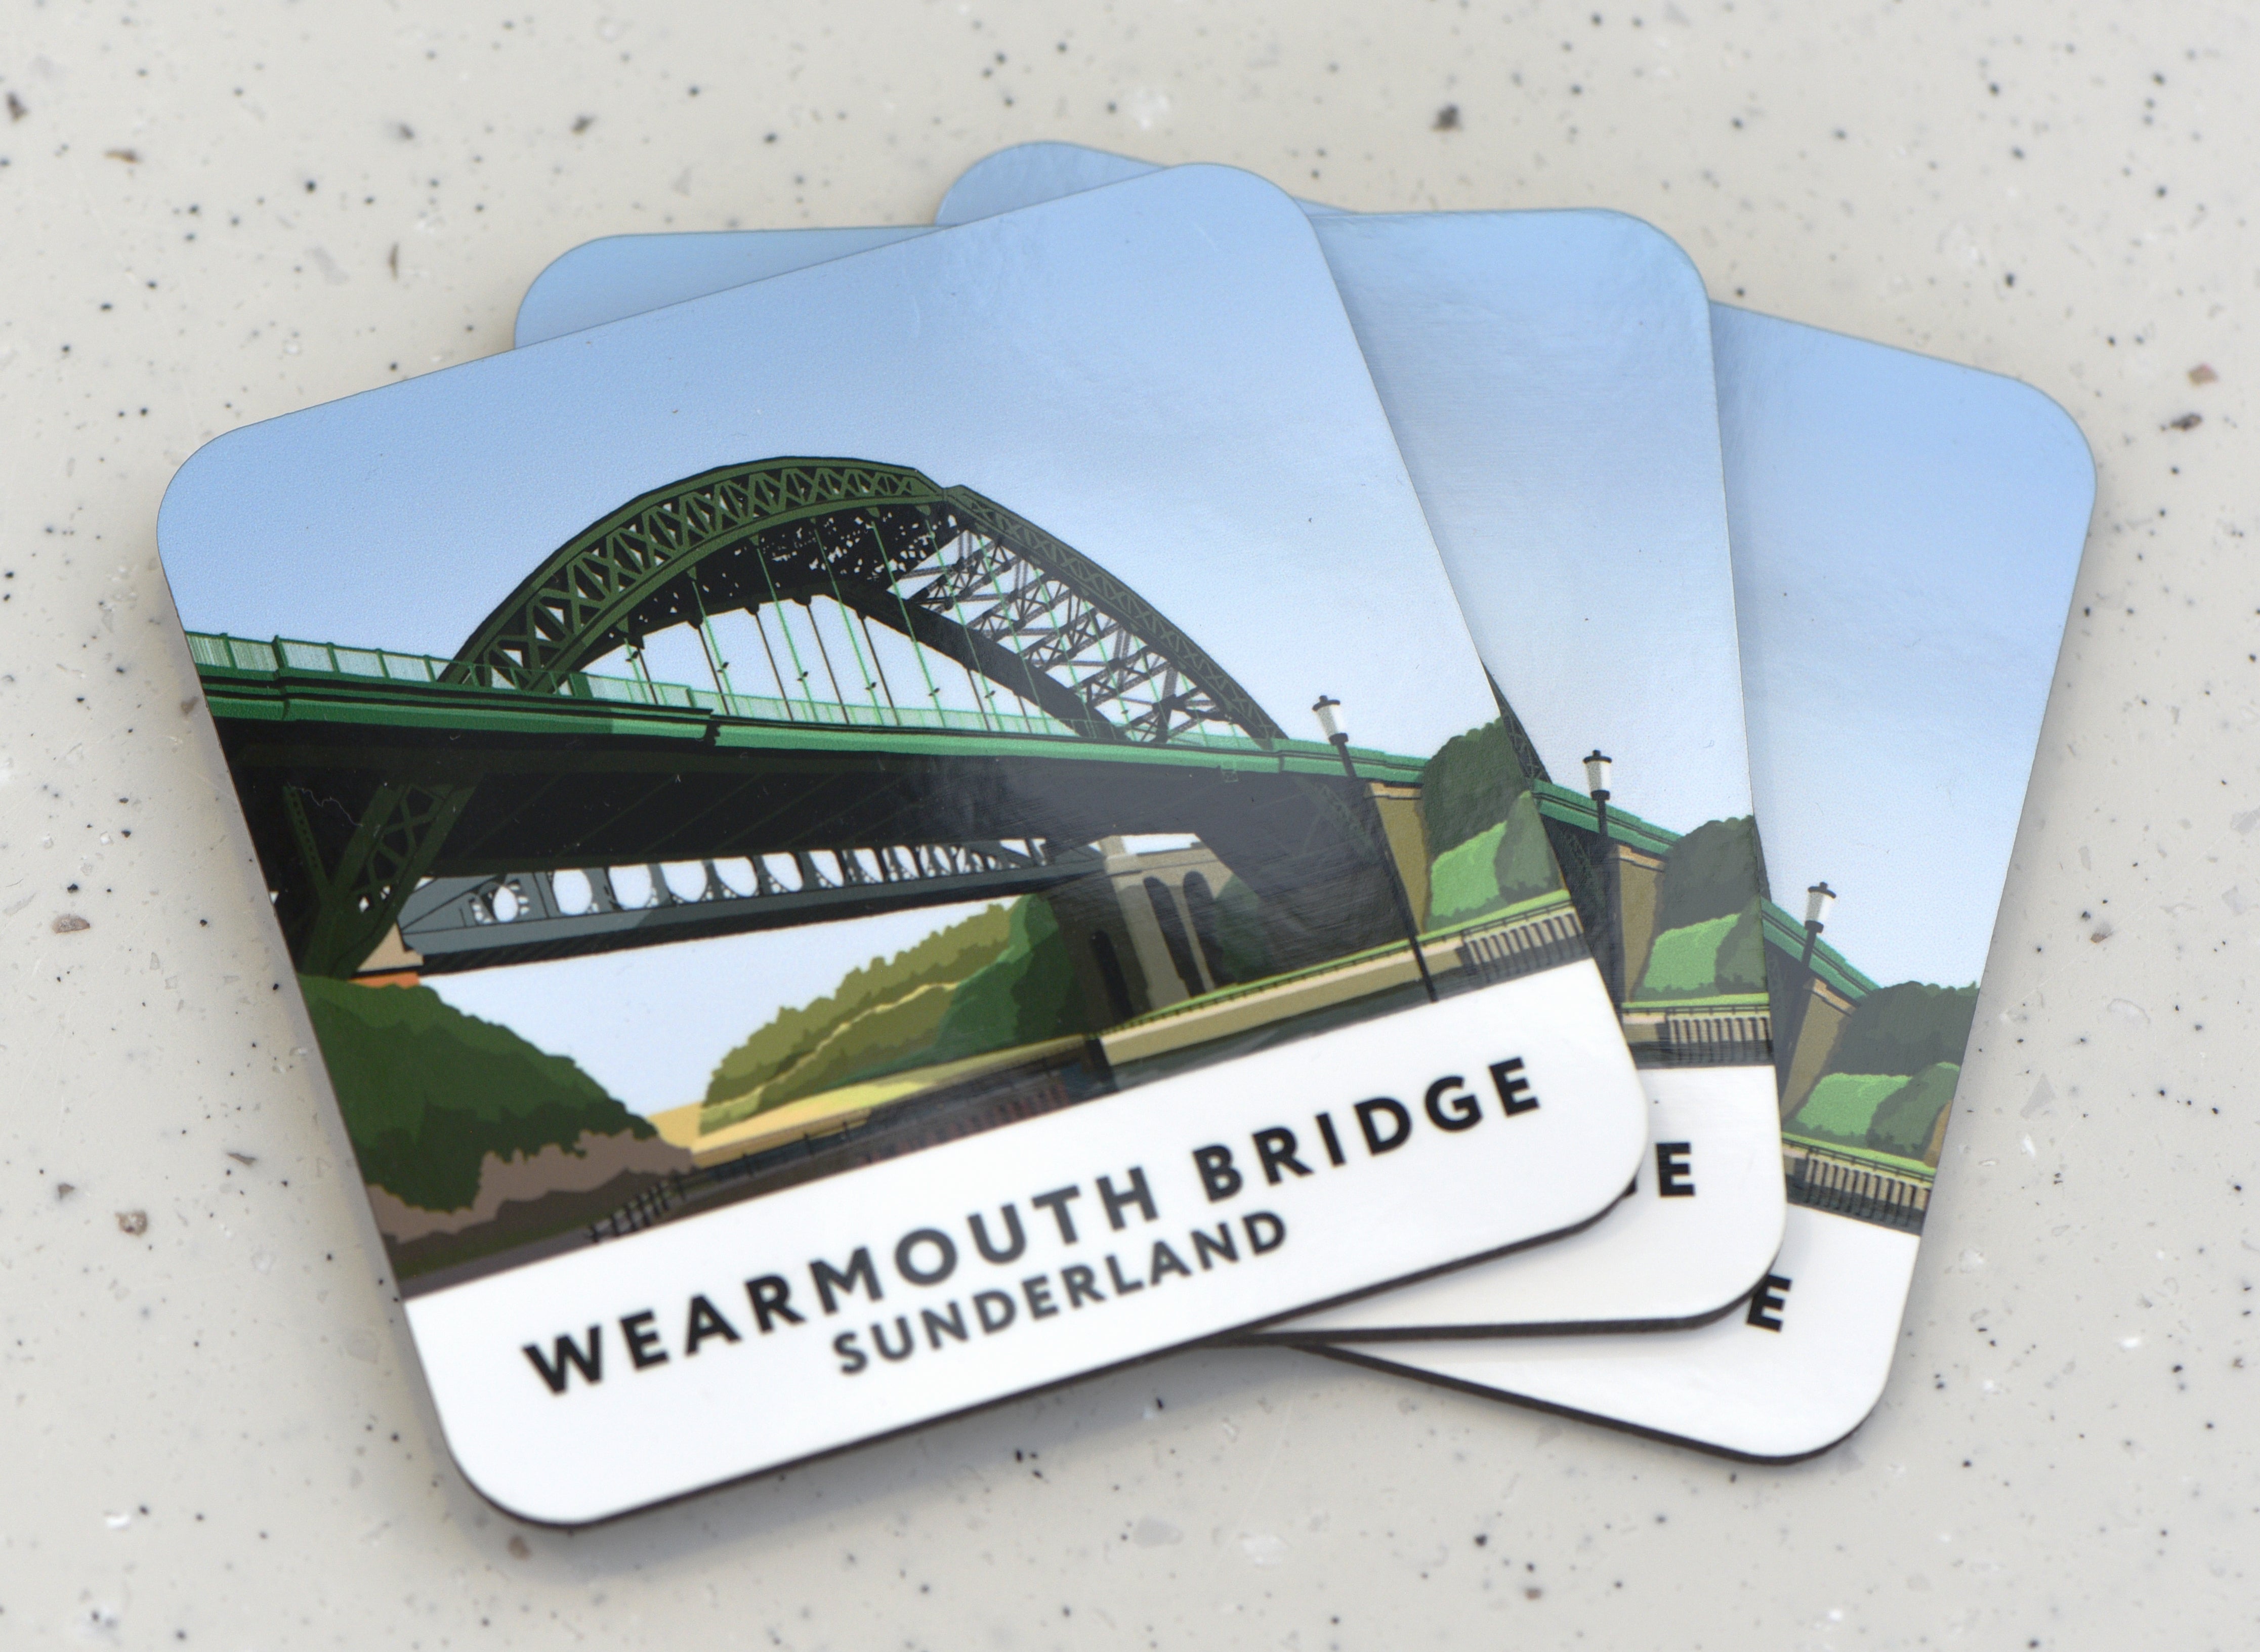 Wearmouth Bridge Coaster